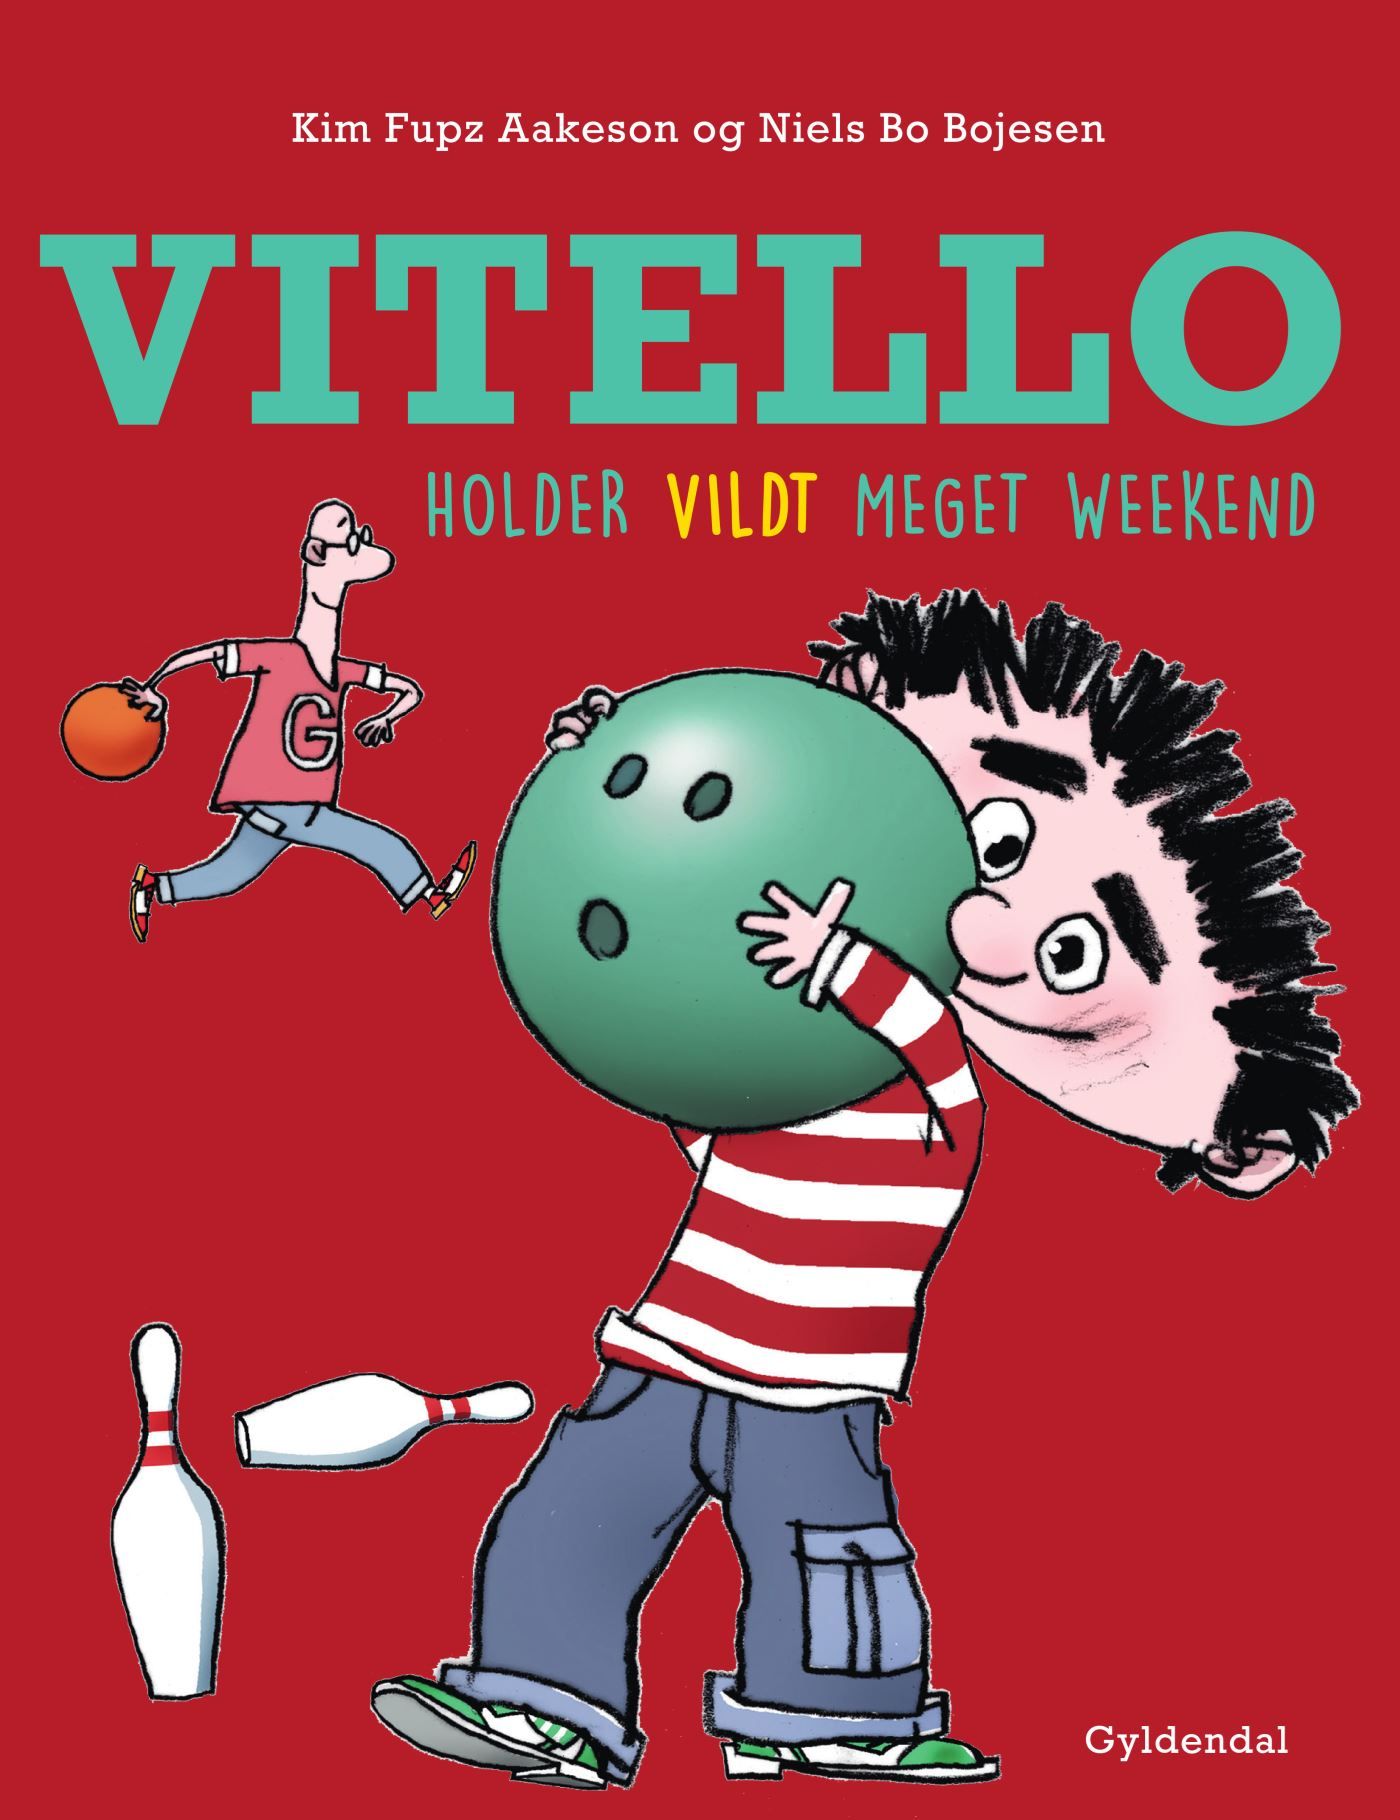 Vitello holder vildt meget weekend, ljudbok av Niels Bo Bojesen, Kim Fupz Aakeson